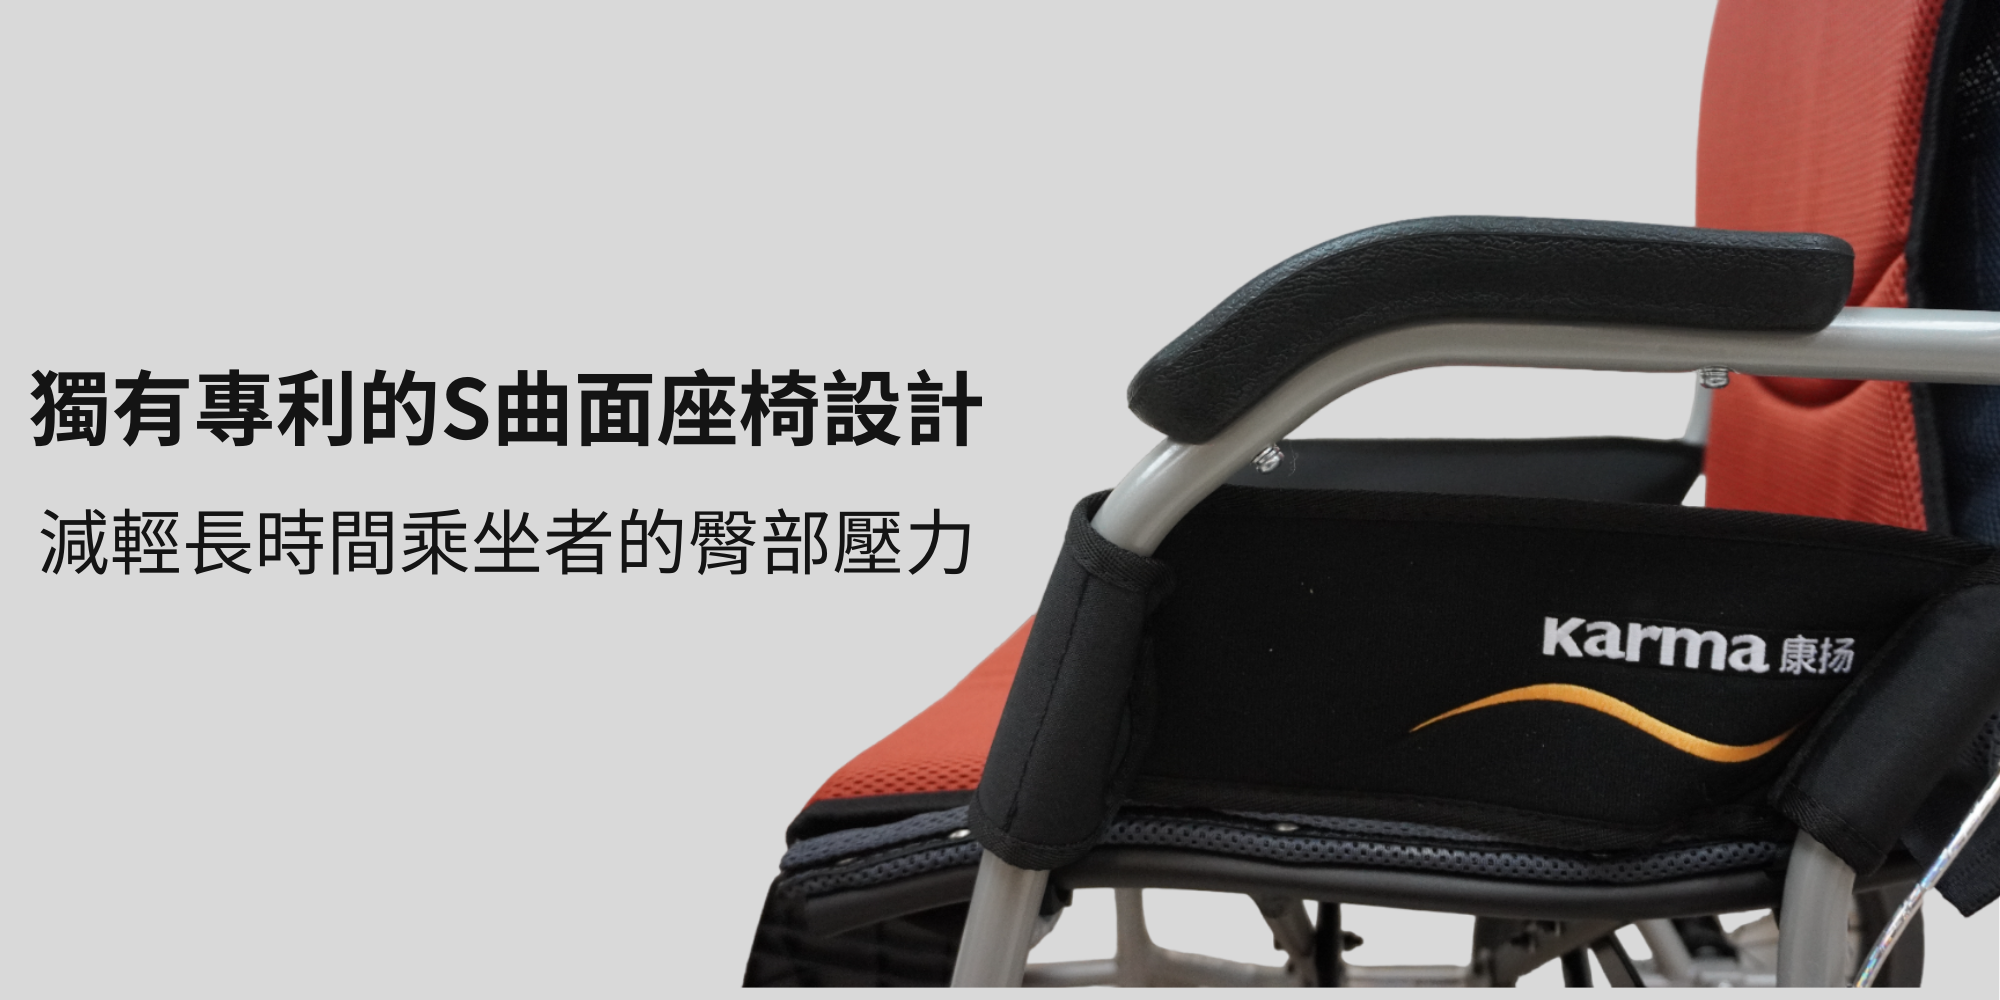 Karma獨有專利的S曲面座椅設計，可以減輕長時間乘坐者的臀部壓力